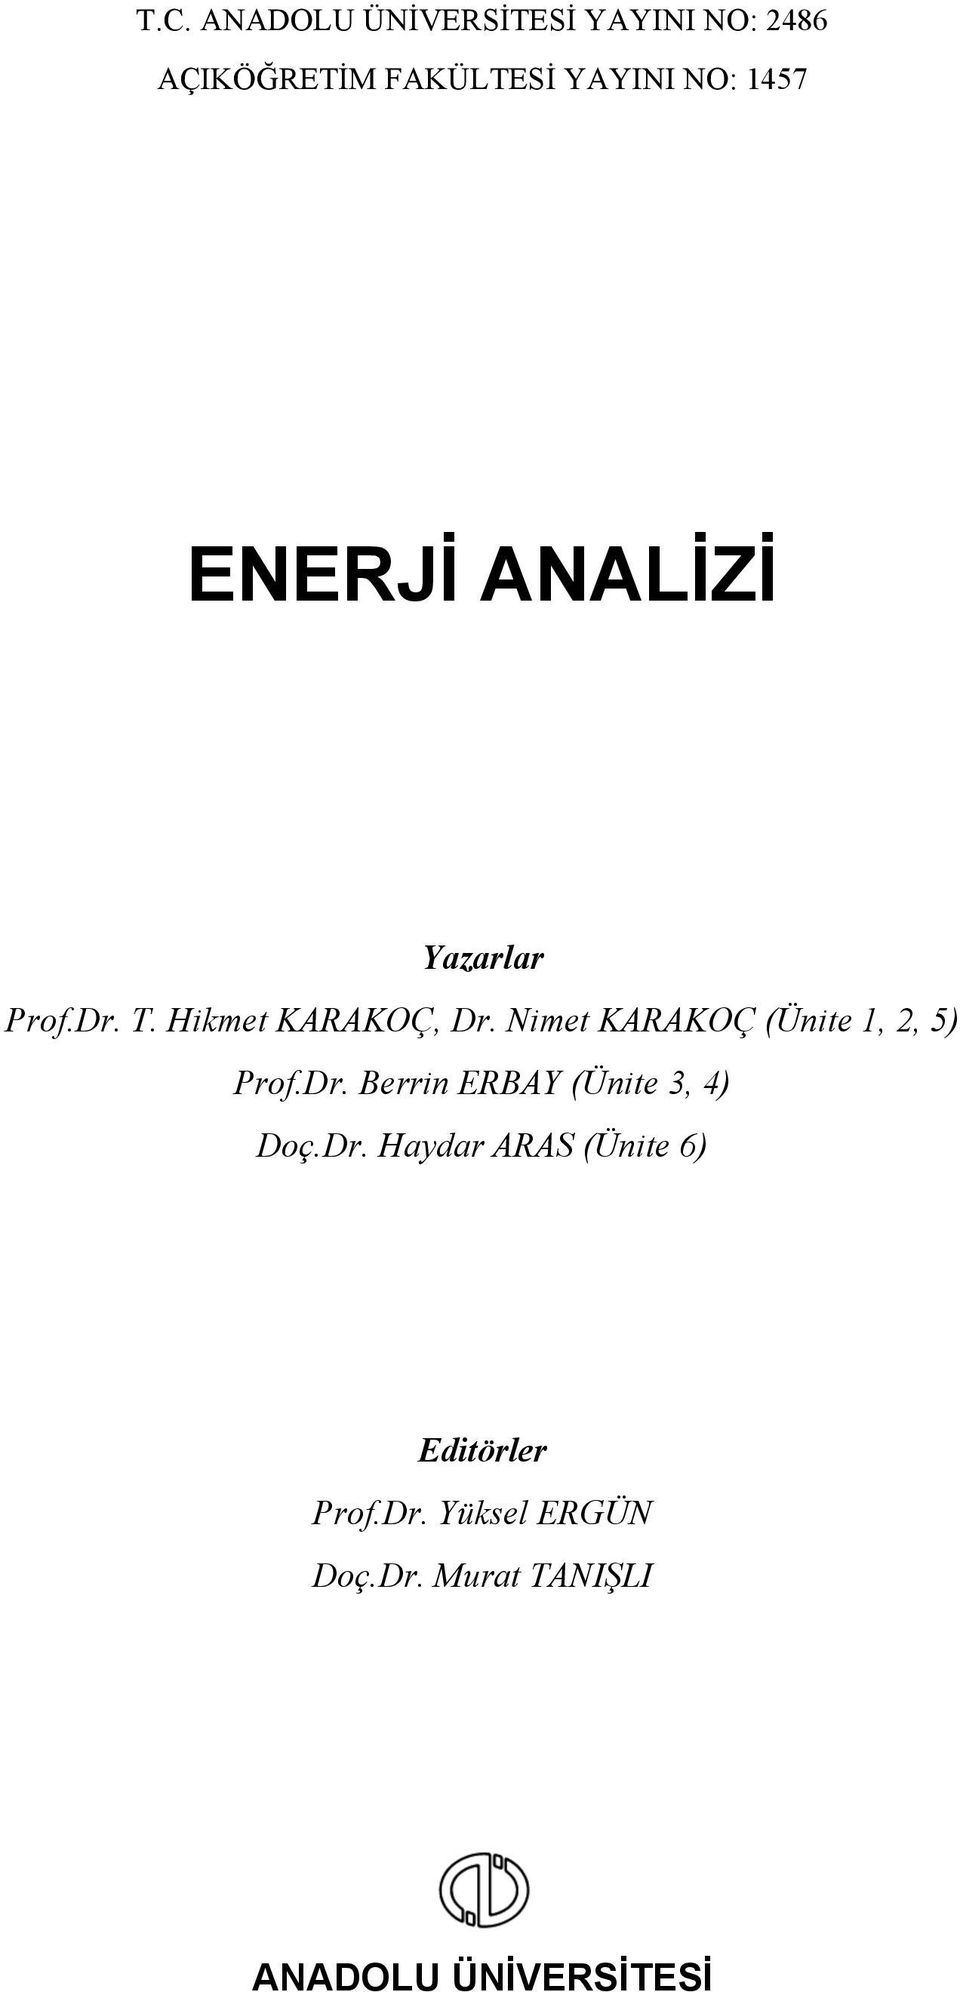 Nimet KARAKOÇ (Ünite 1, 2, 5) Prof.Dr. Berrin ERBAY (Ünite 3, 4) Doç.Dr. Haydar ARAS (Ünite 6) Editörler Prof.